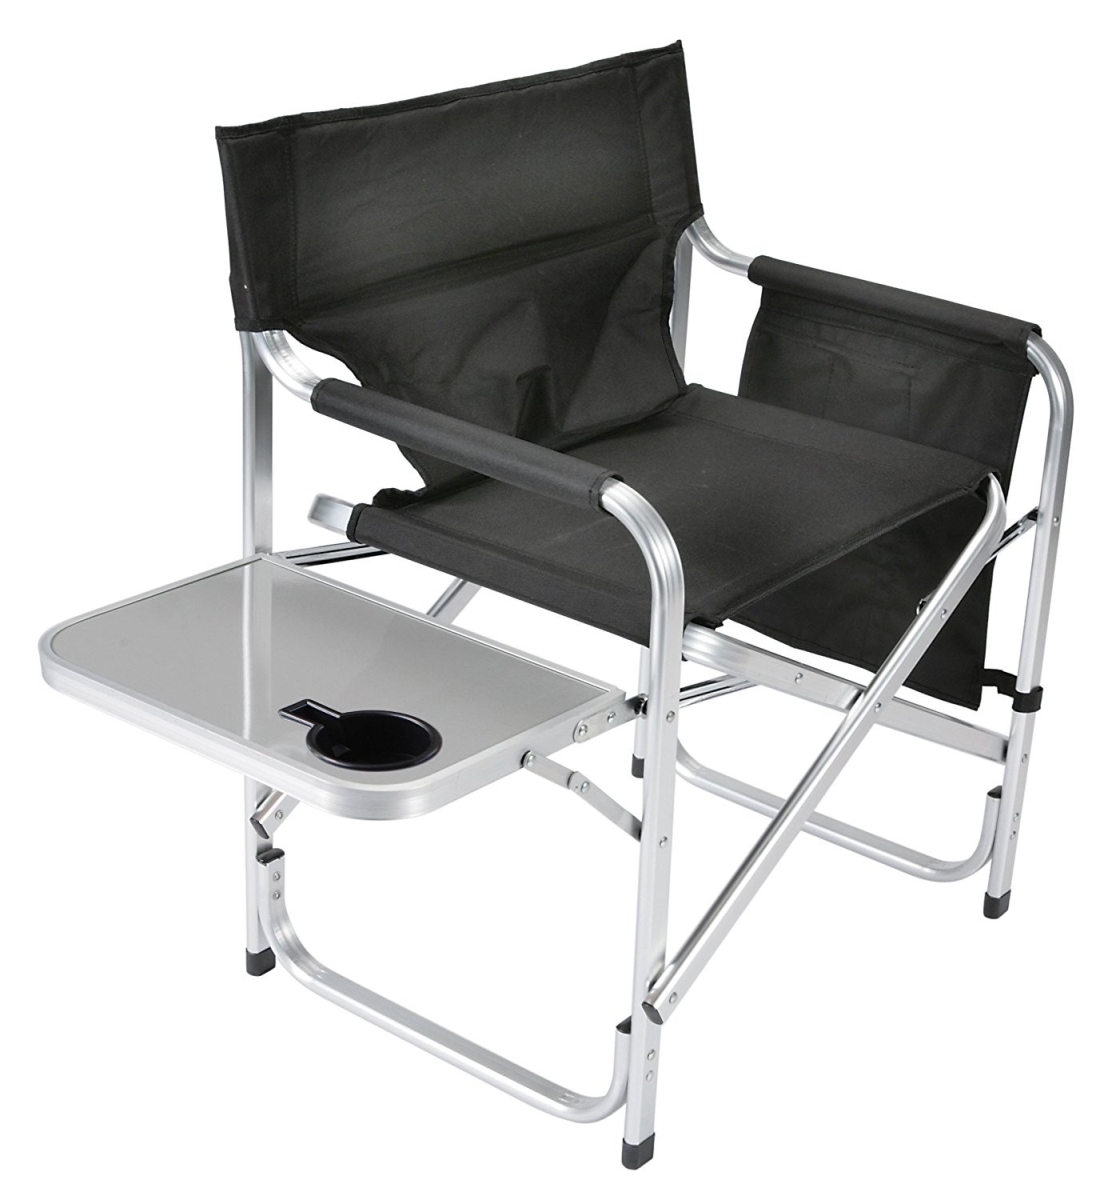 Flk-52284 Compact Director Chair - Black